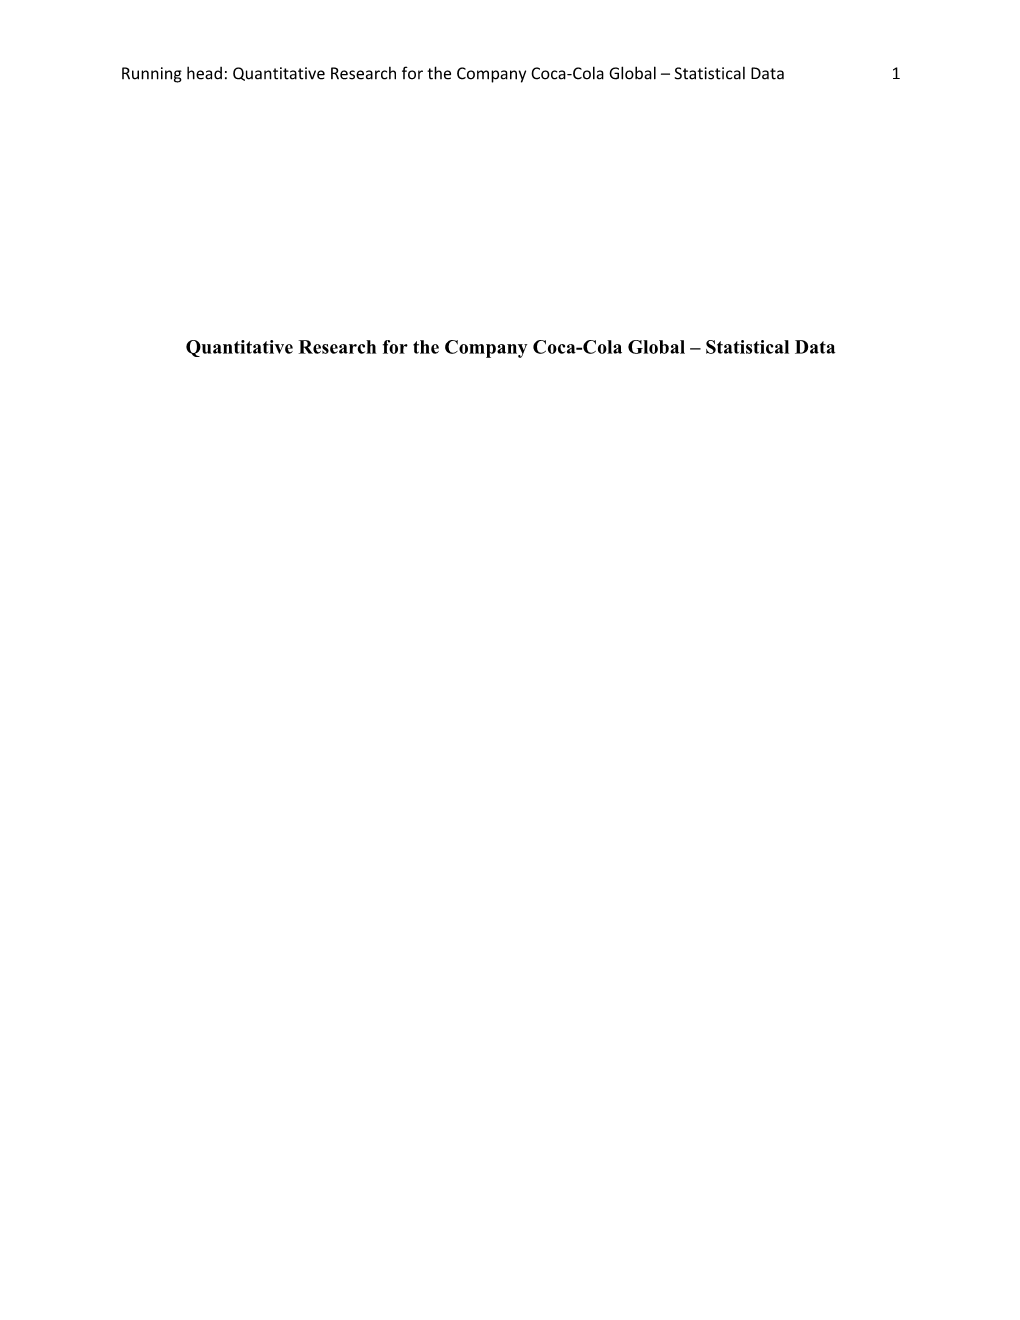 Quantitative Research for the Company Coca-Cola Global Statistical Data